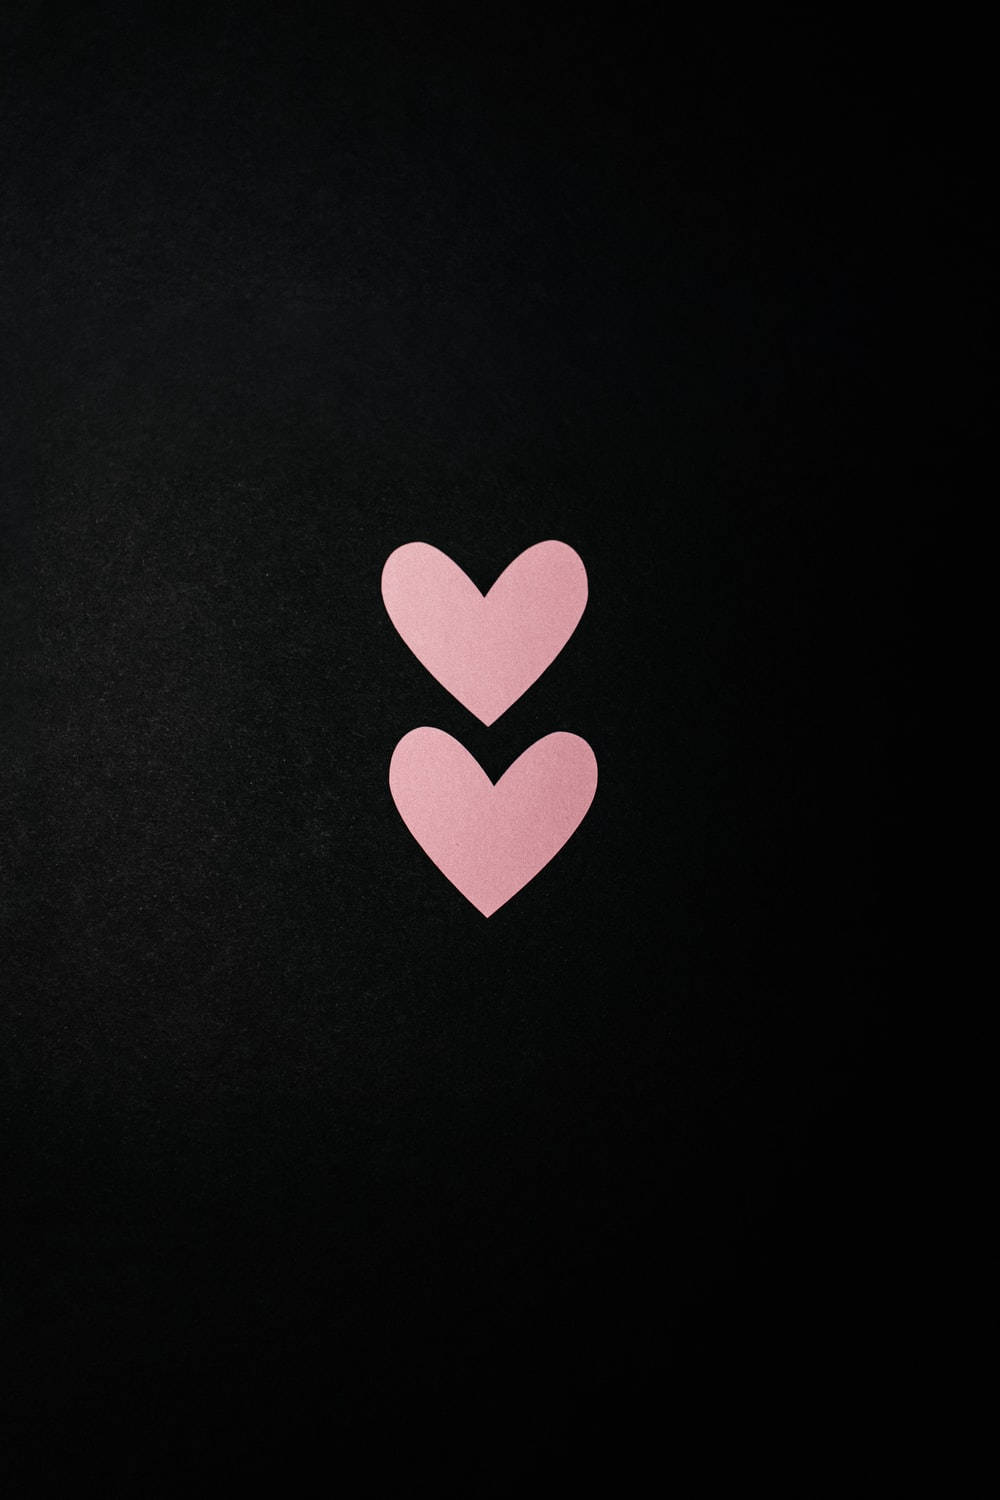 Pastel Pink Heart In Black Background Wallpaper